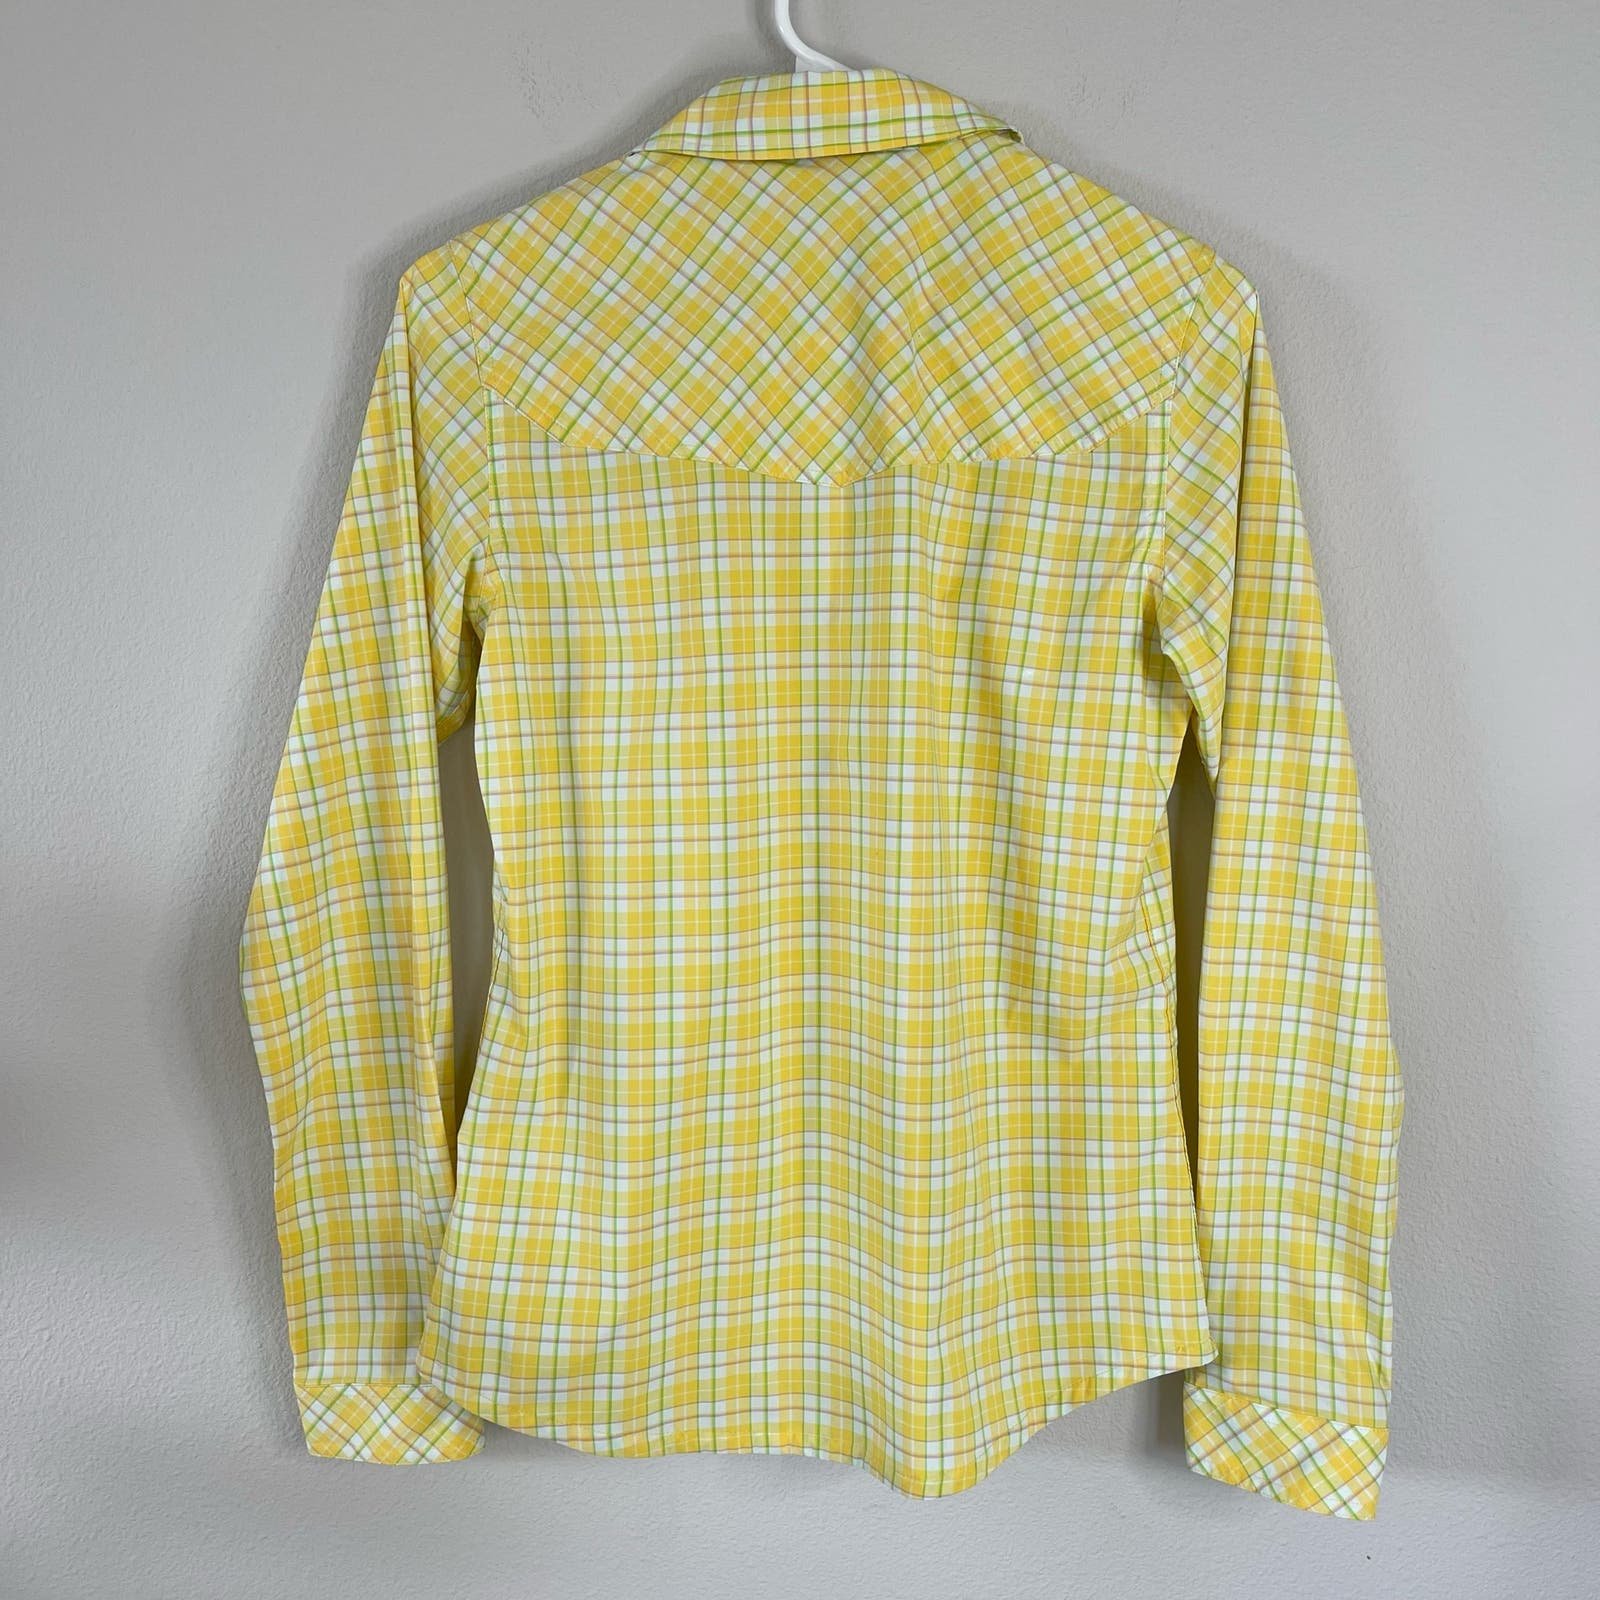 Stylish NWOT Stio Yellow Plaid Eddy Long Sleeve Shirt (Size XS) JFyJGws7G New Style